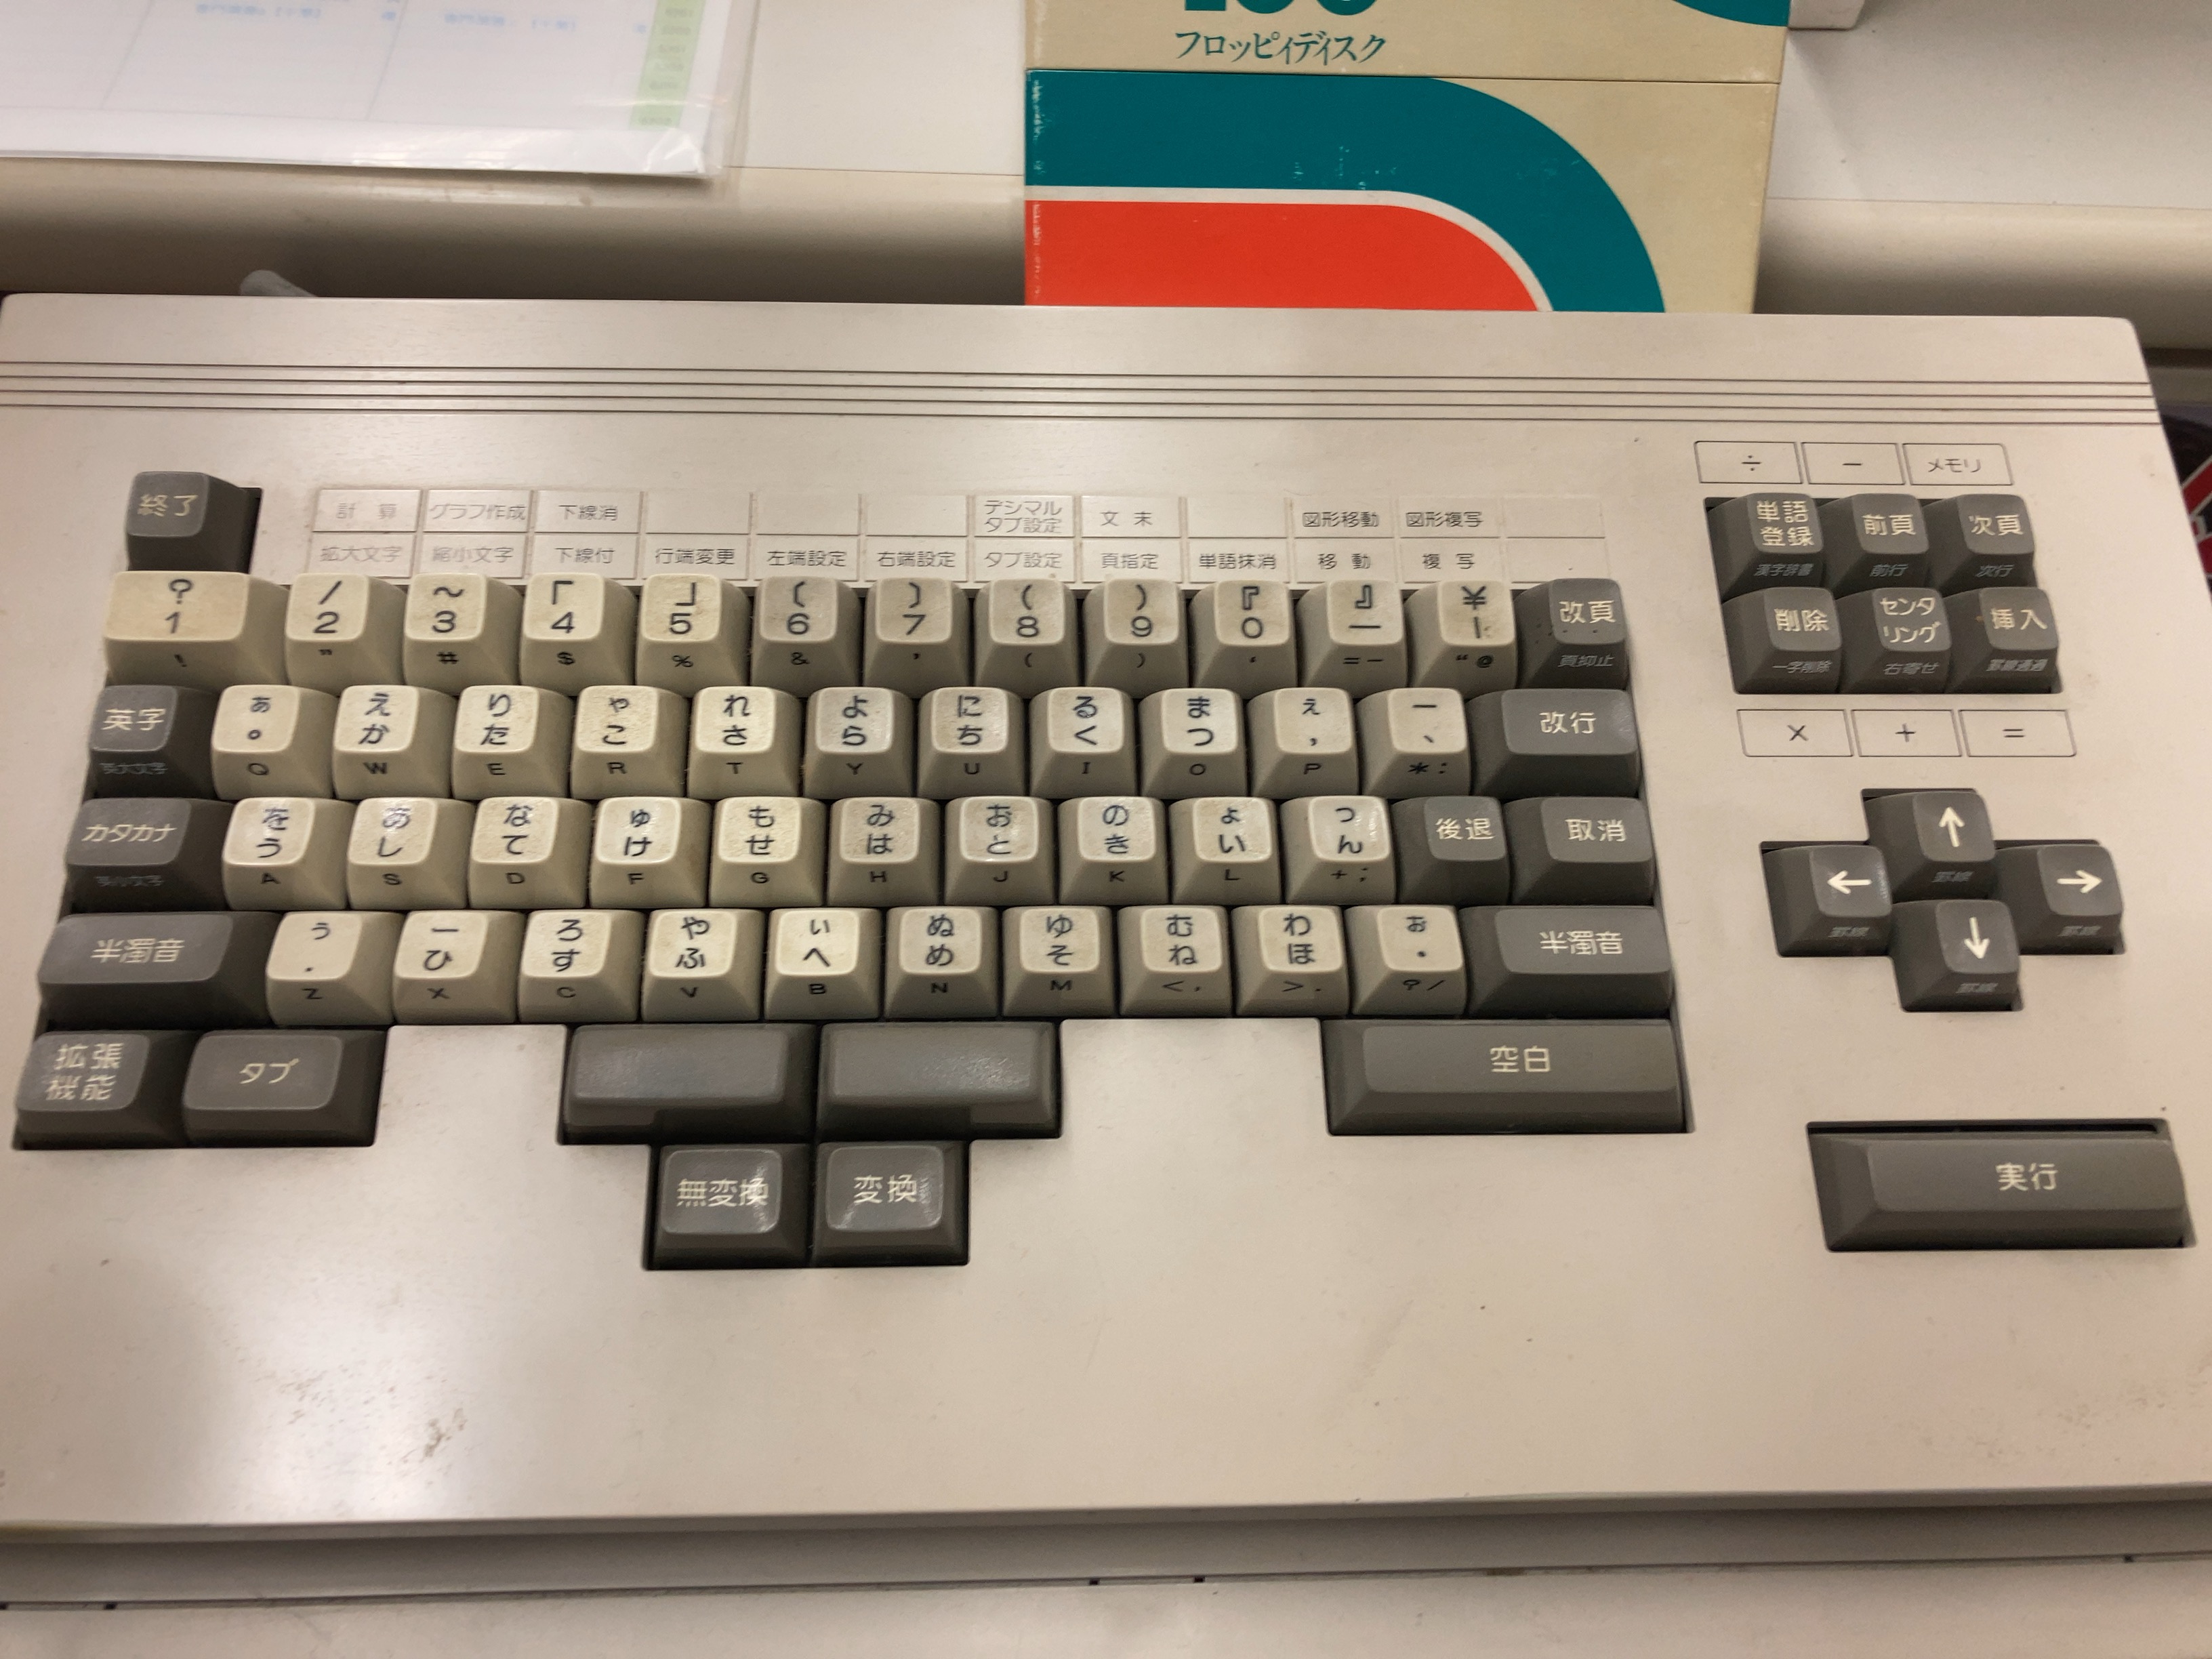 oasis 100 keyboard 2021-05-25